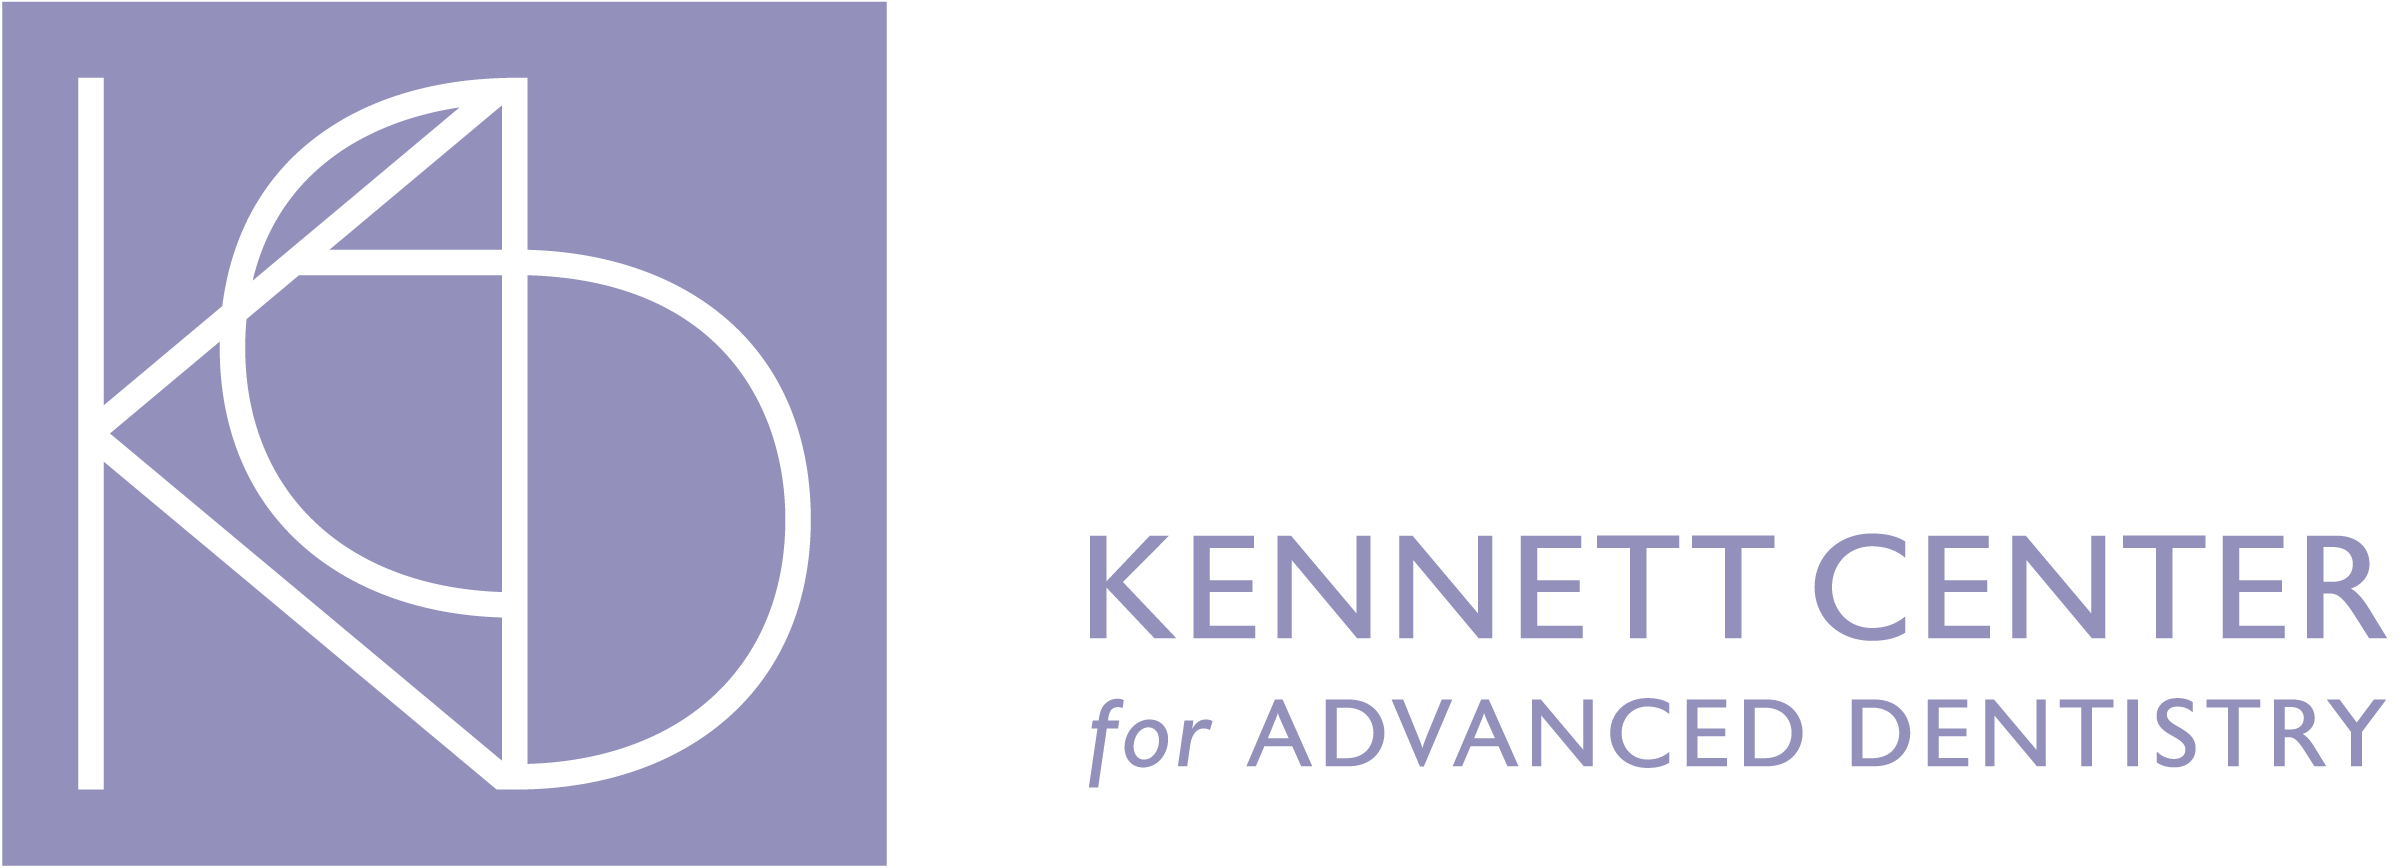 KCAD logo